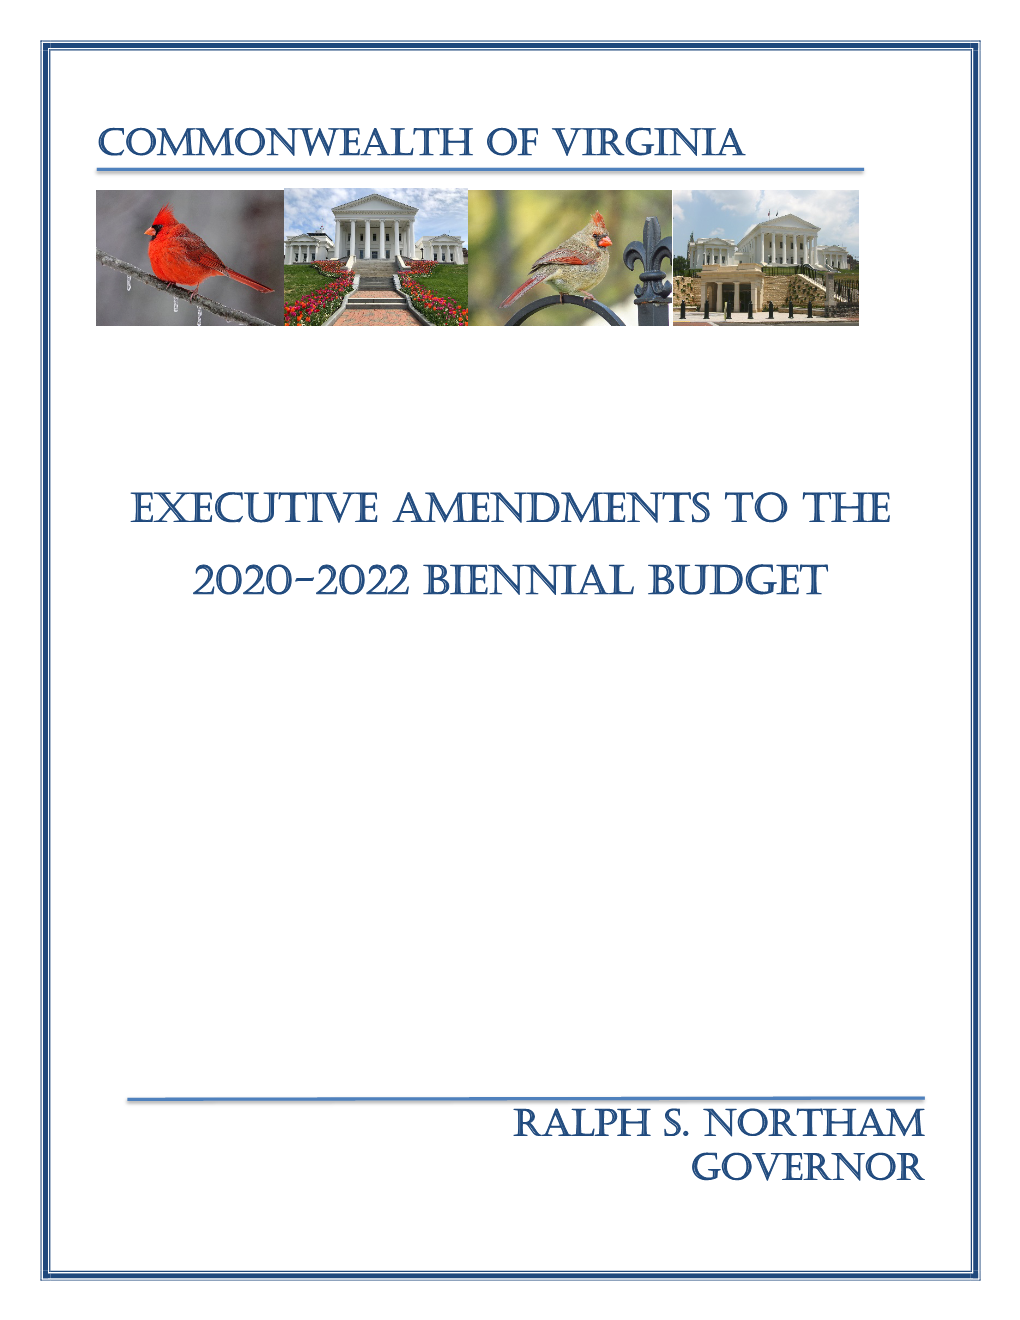 Executive Amendments to the 2020-2022 Biennial Budget